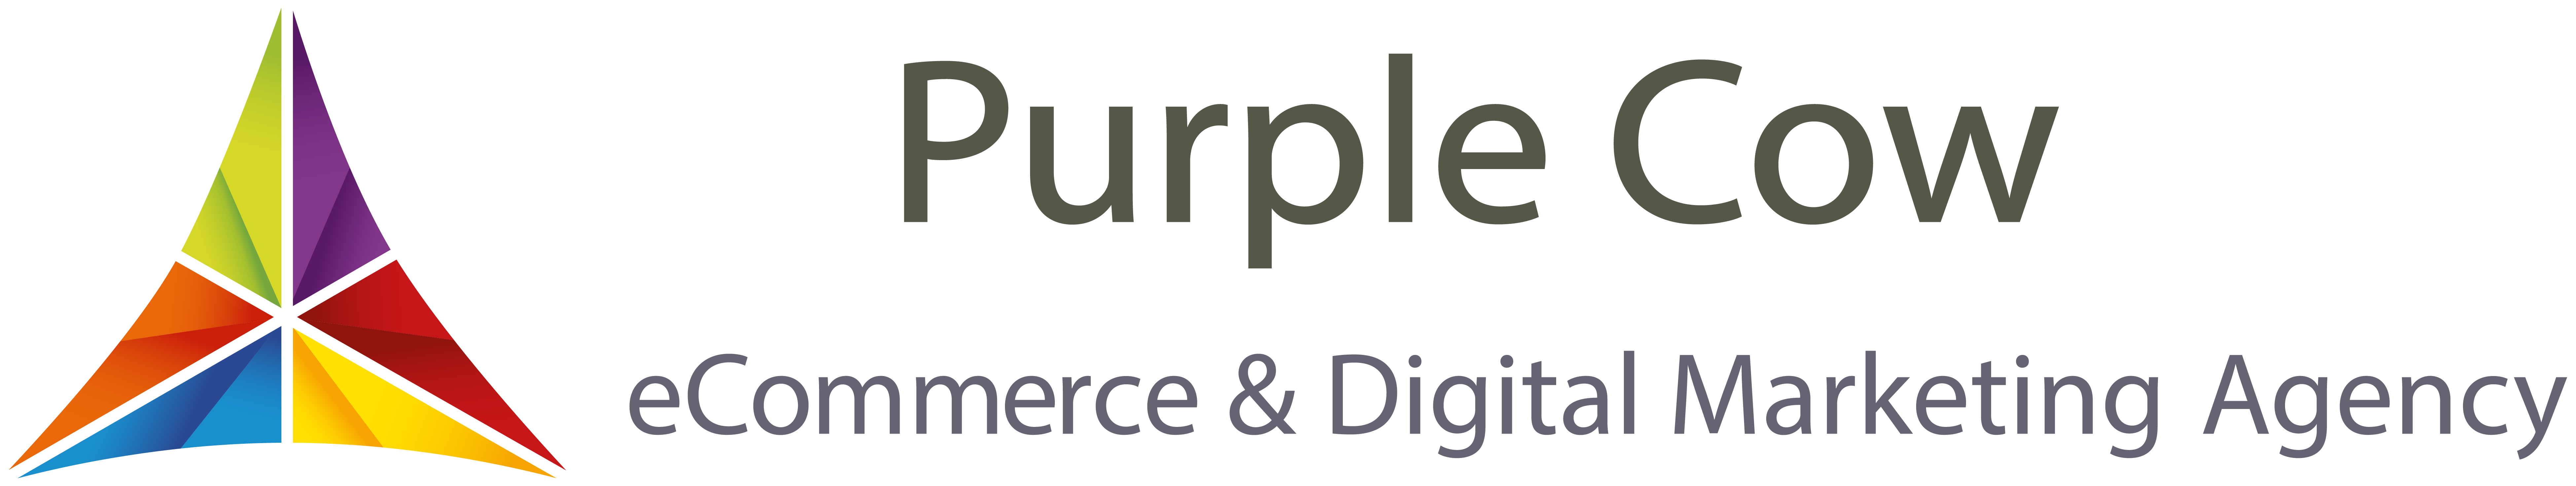 Purple Cow | eCommerce & Digital Marketing Agency